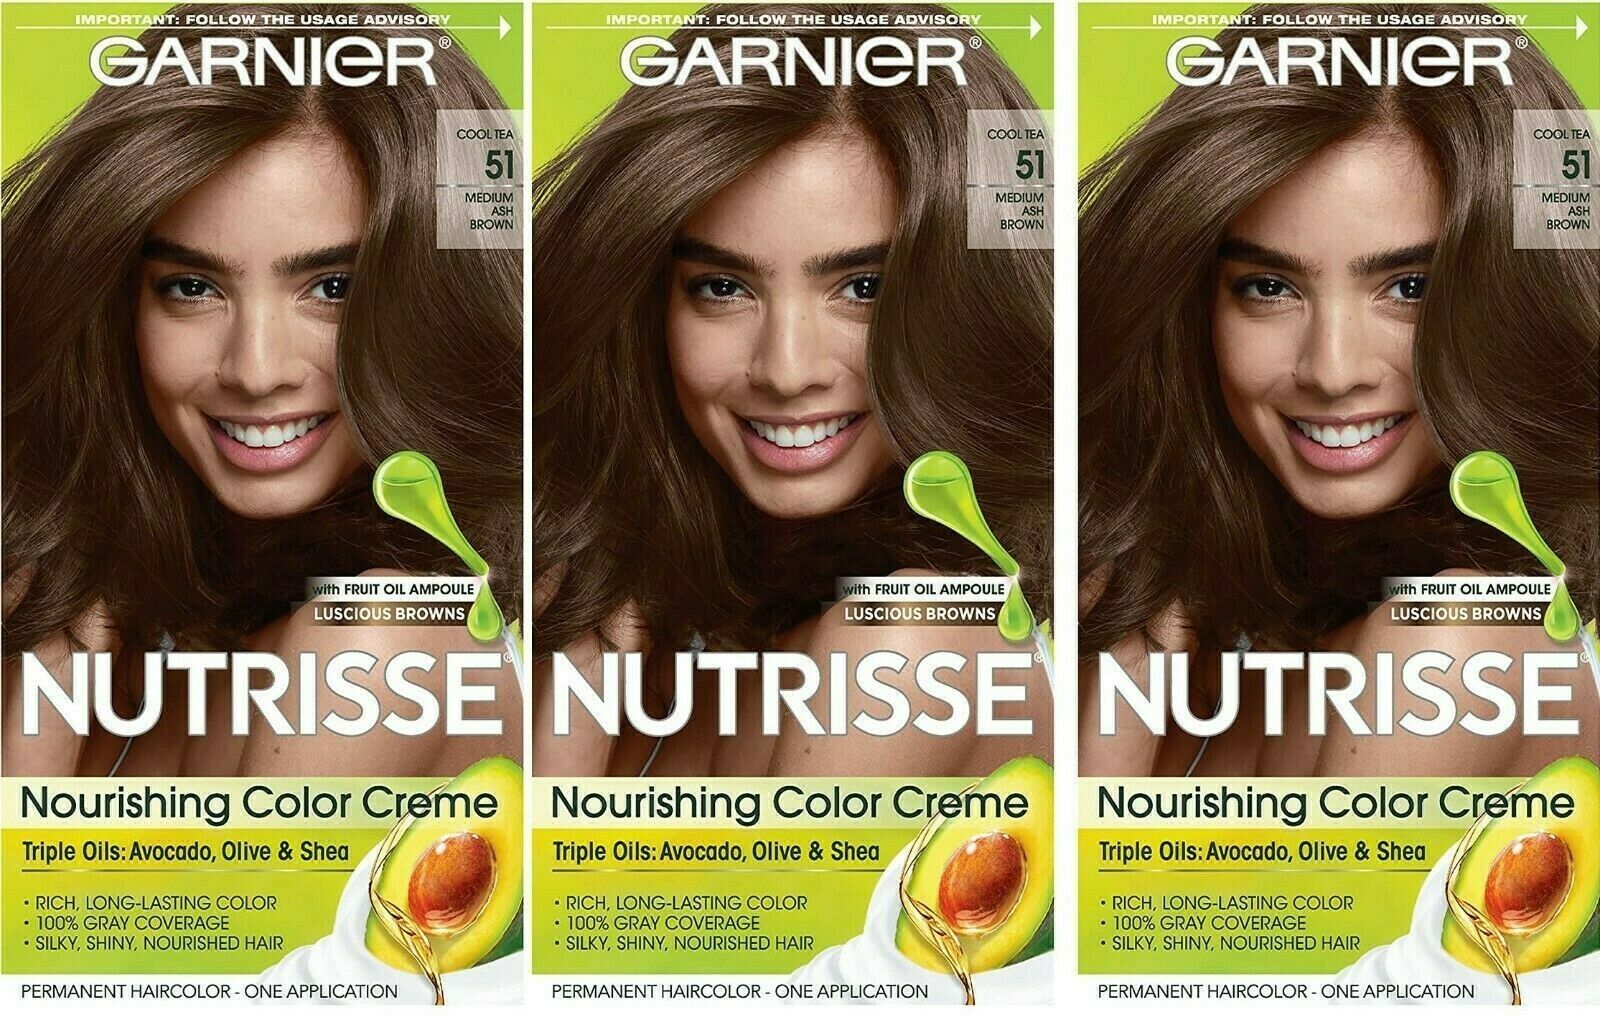 3 x Garnier Nutrisse Nourishing Hair Color Creme, 51 Medium Ash Brown(Cool Tea) - $29.69